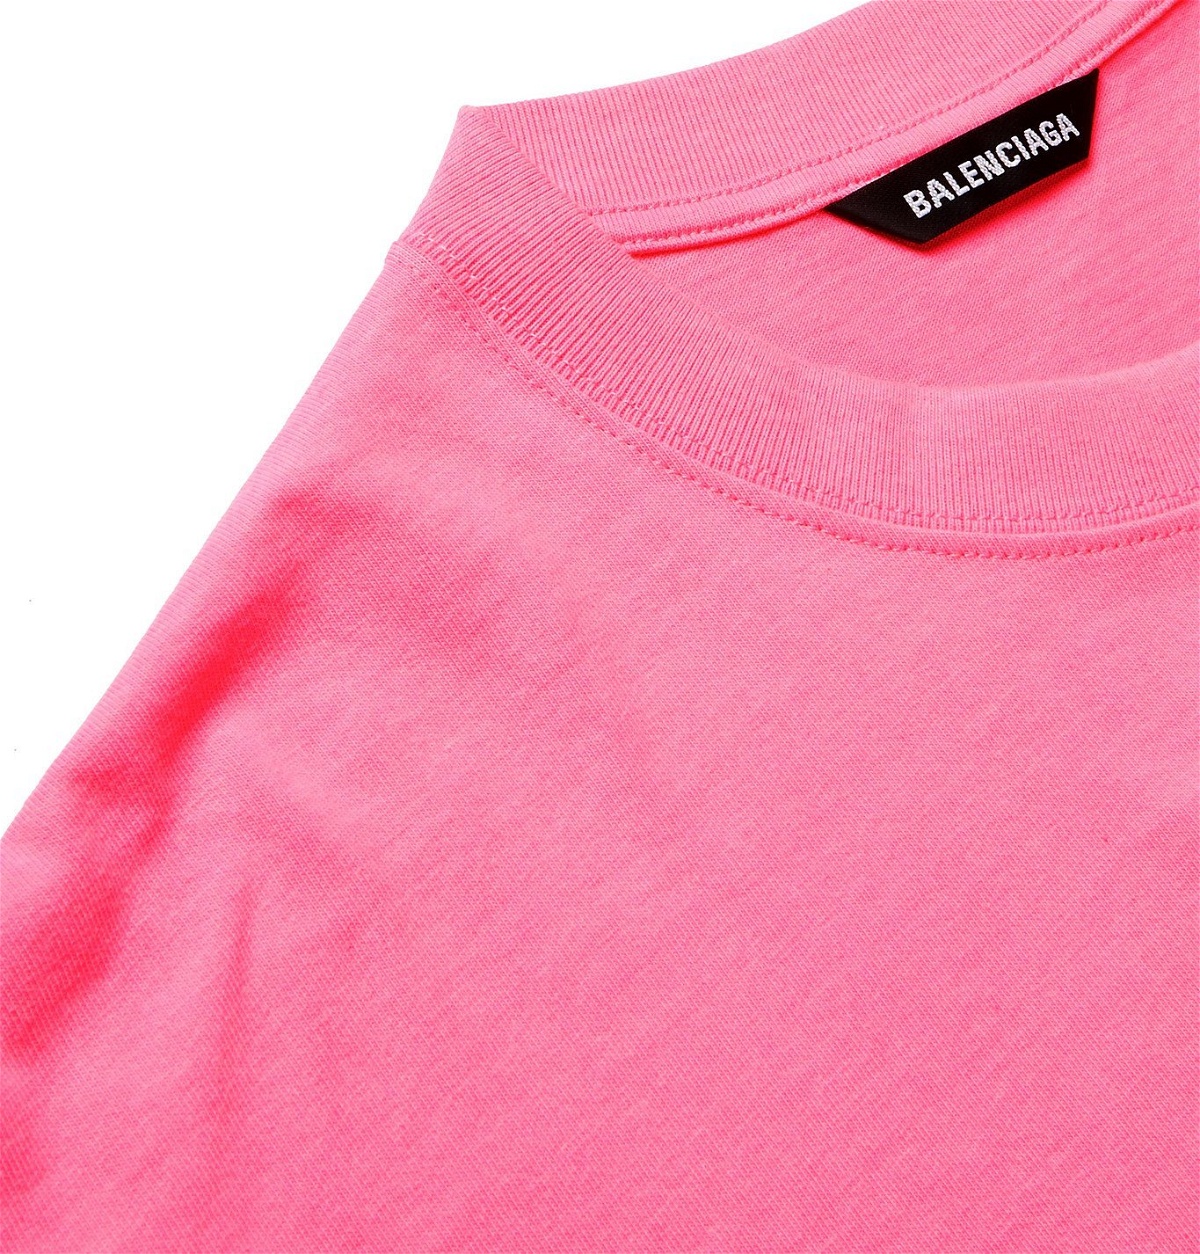 Balenciaga Overwear  TShirt Back Logo in pink 826595